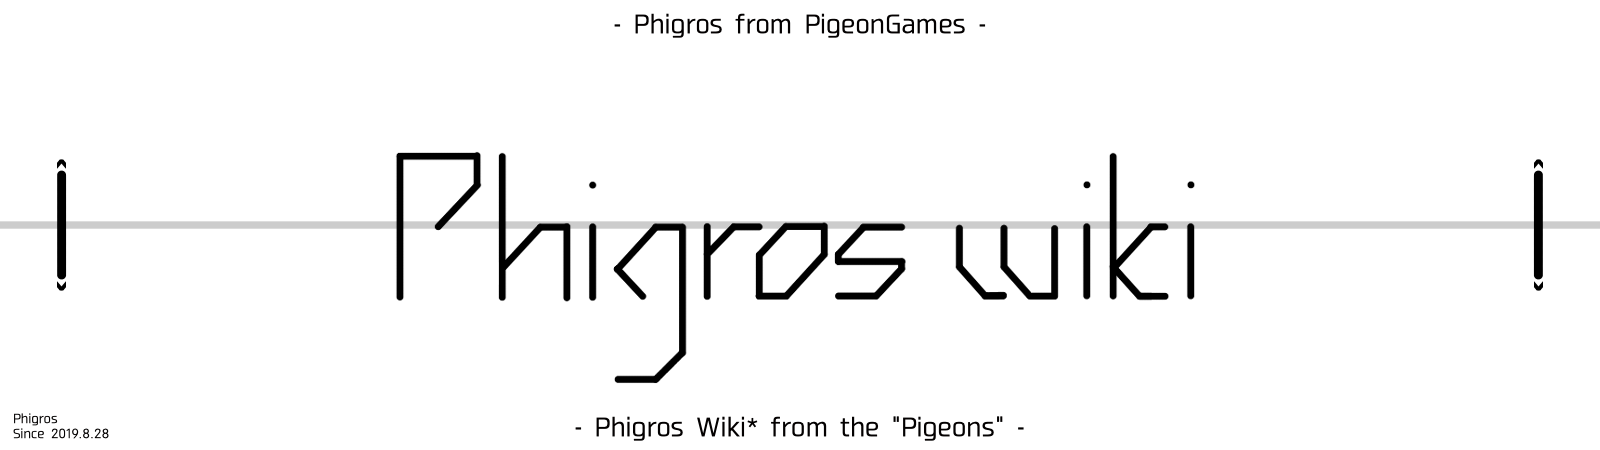 Phigros_wiki_header_kari_2.png